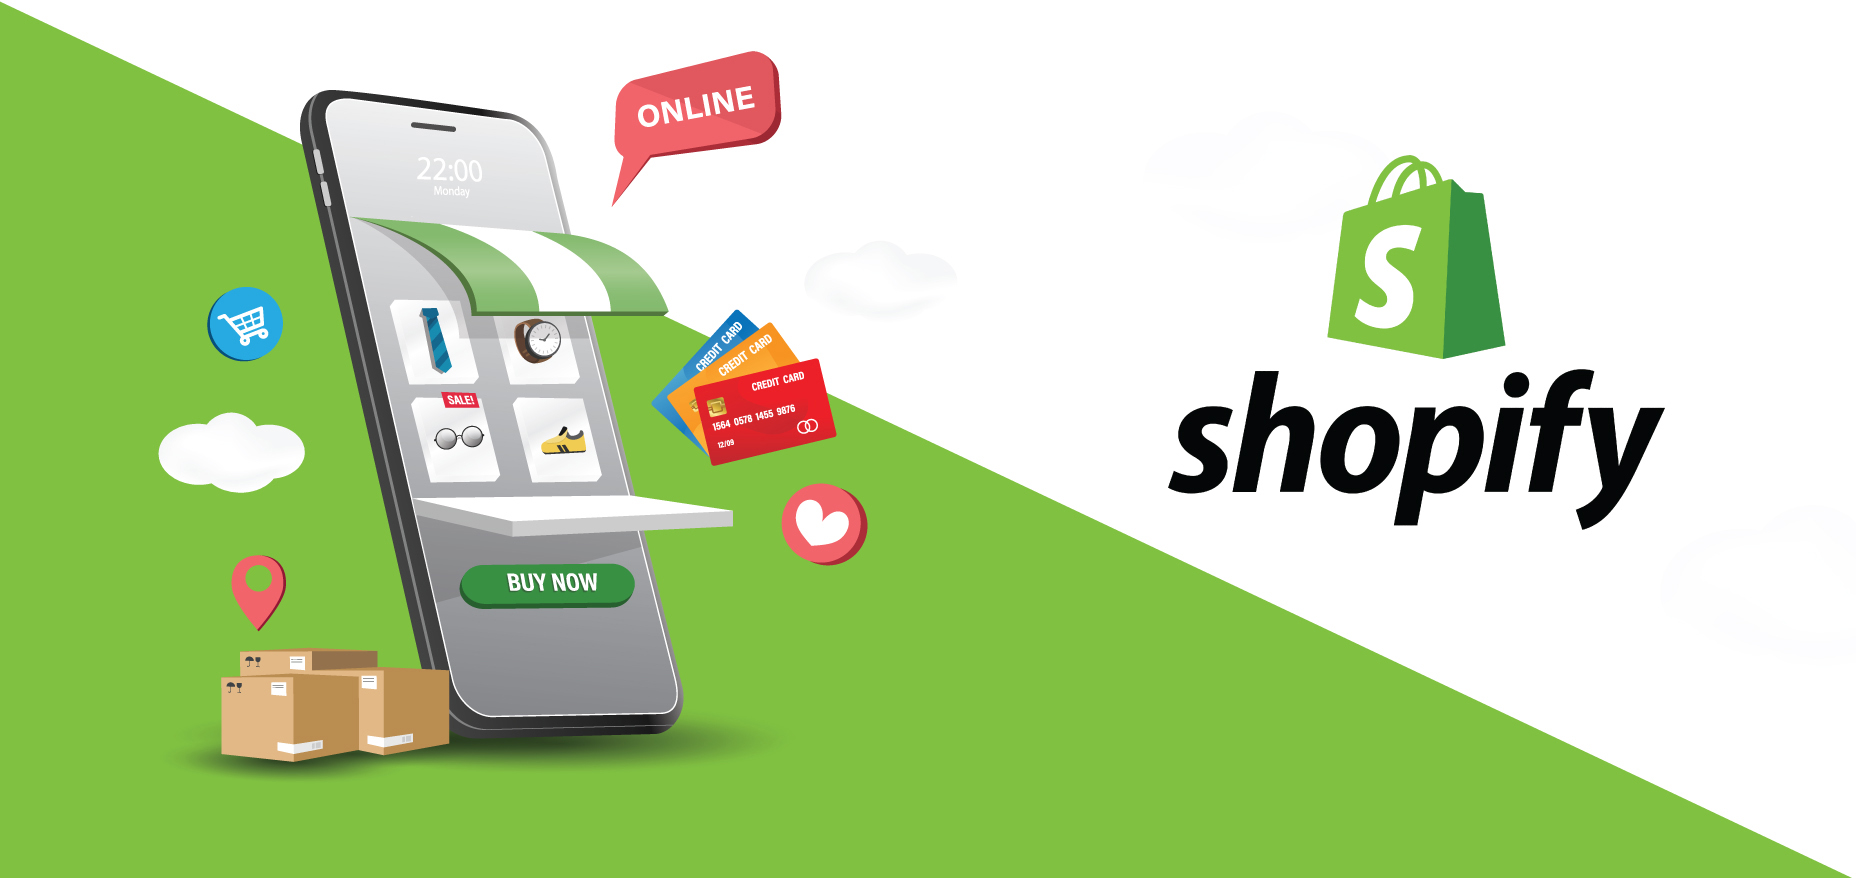 B2B および SMEs企業は Shopify を選択する必要がありますか? ビジネス オーナーにとって最良の選択肢はどれですか？